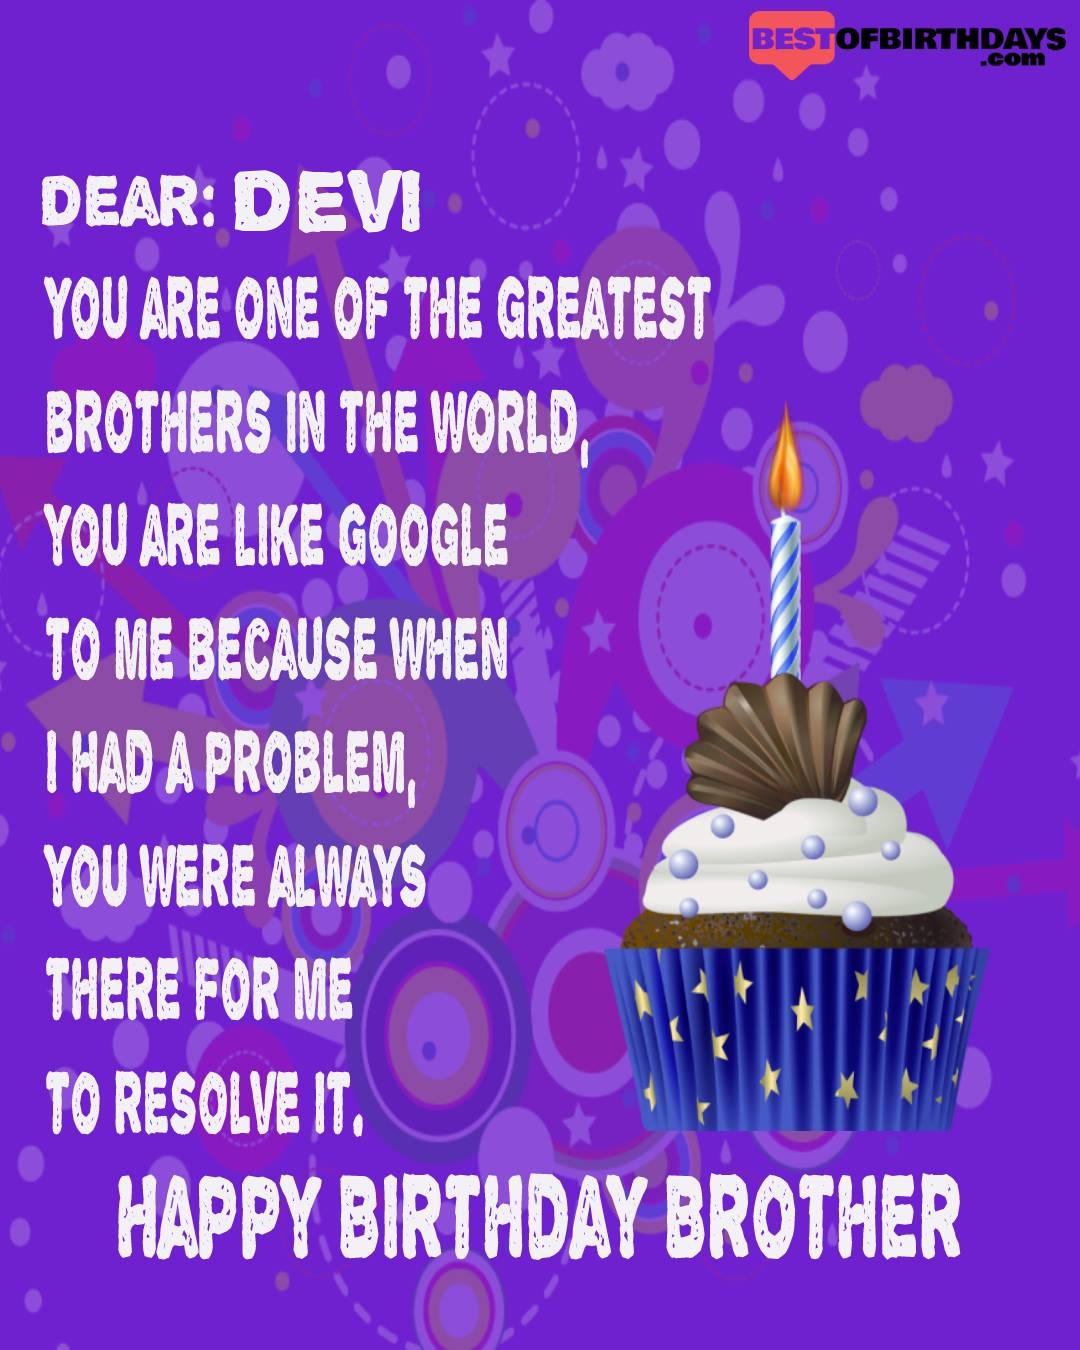 Happy birthday devi bhai brother bro